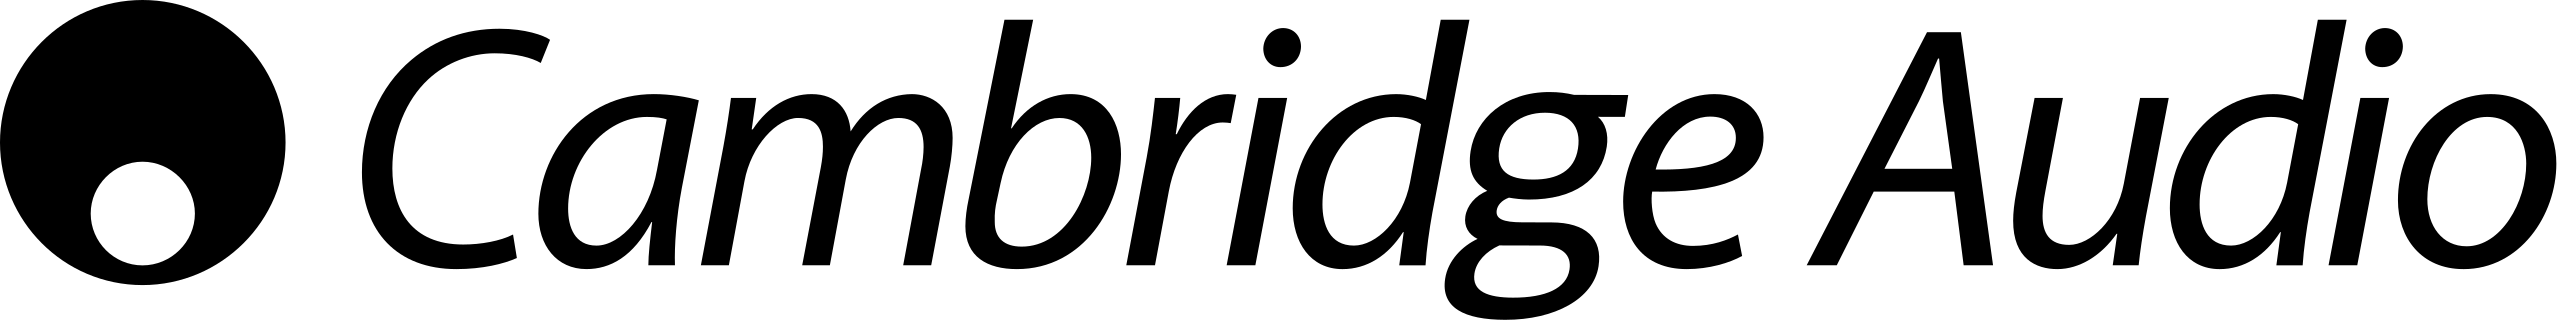 Cambridge Audio logo